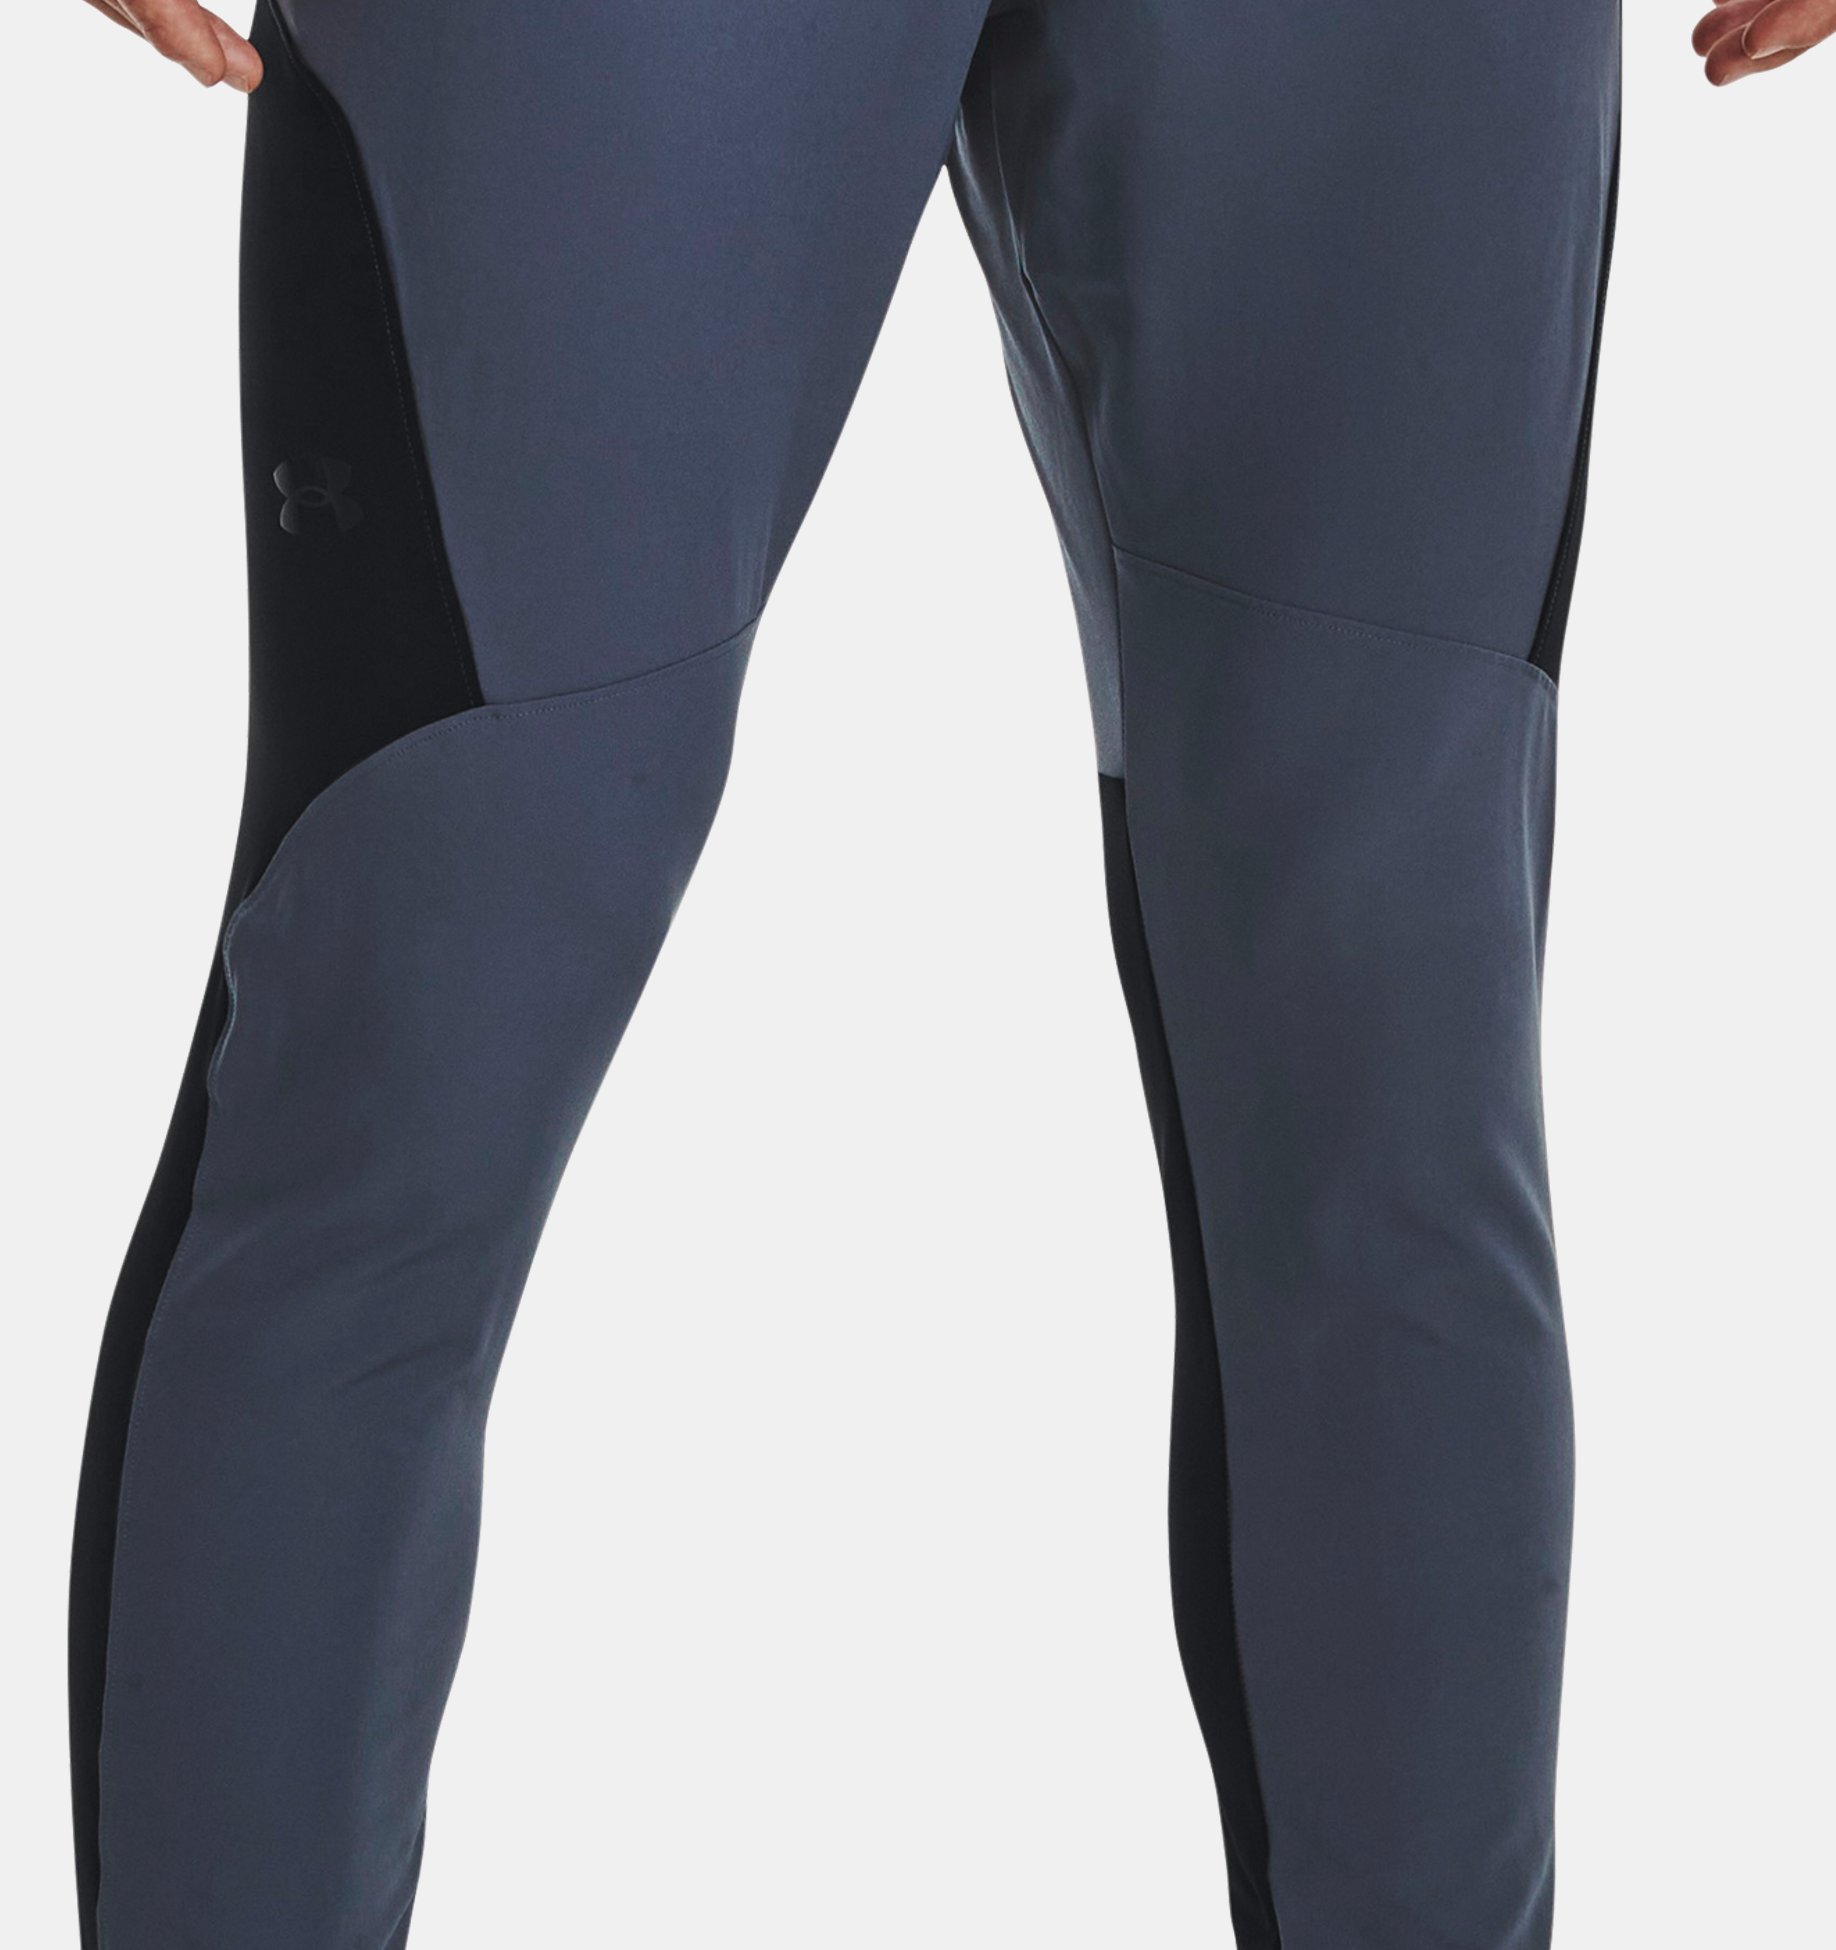 Men's UA Unstoppable Hybrid Pants